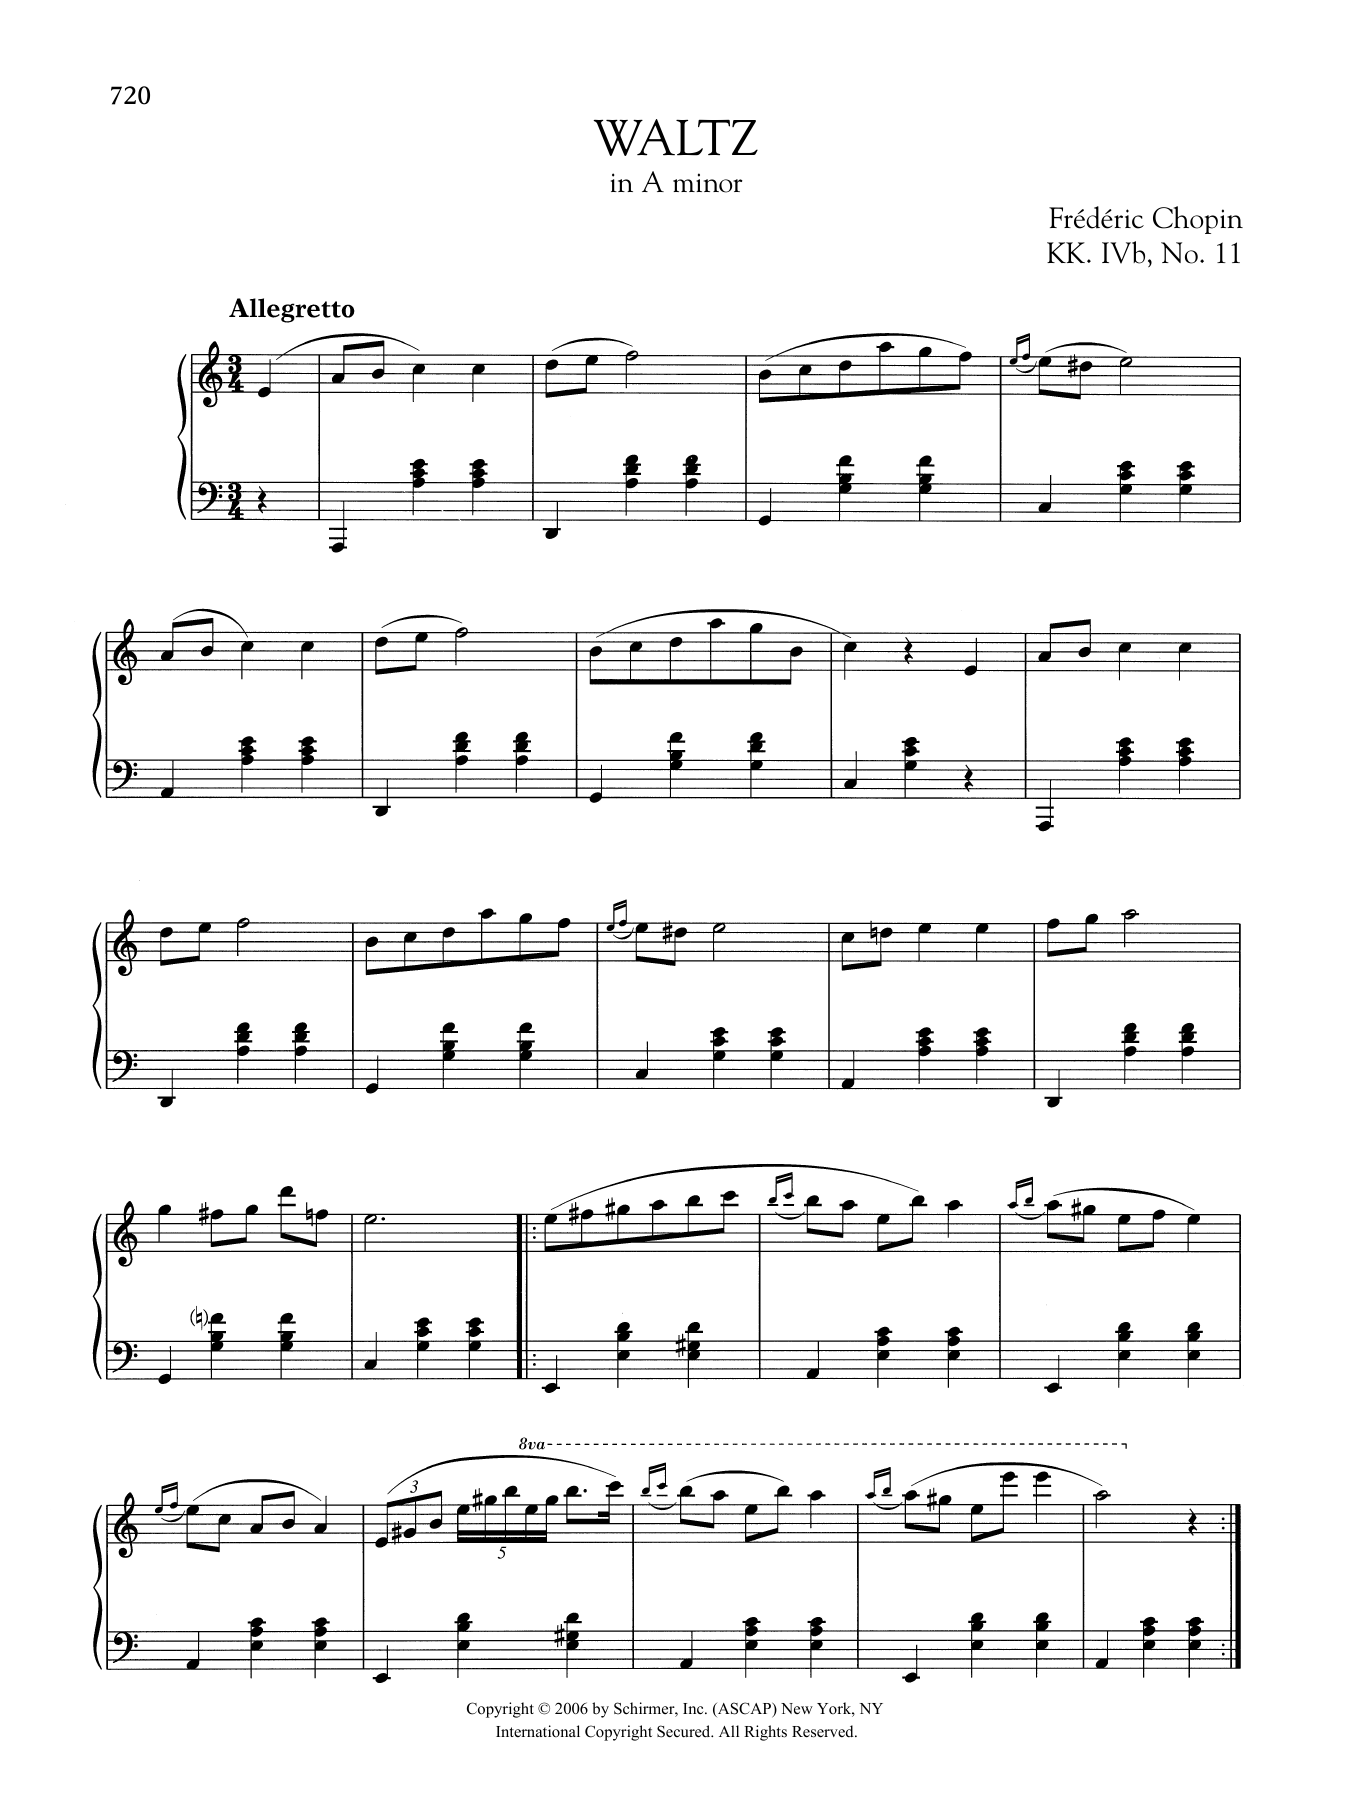 Download Frederic Chopin Waltz in A minor, KK. IVb, No. 11 Sheet Music